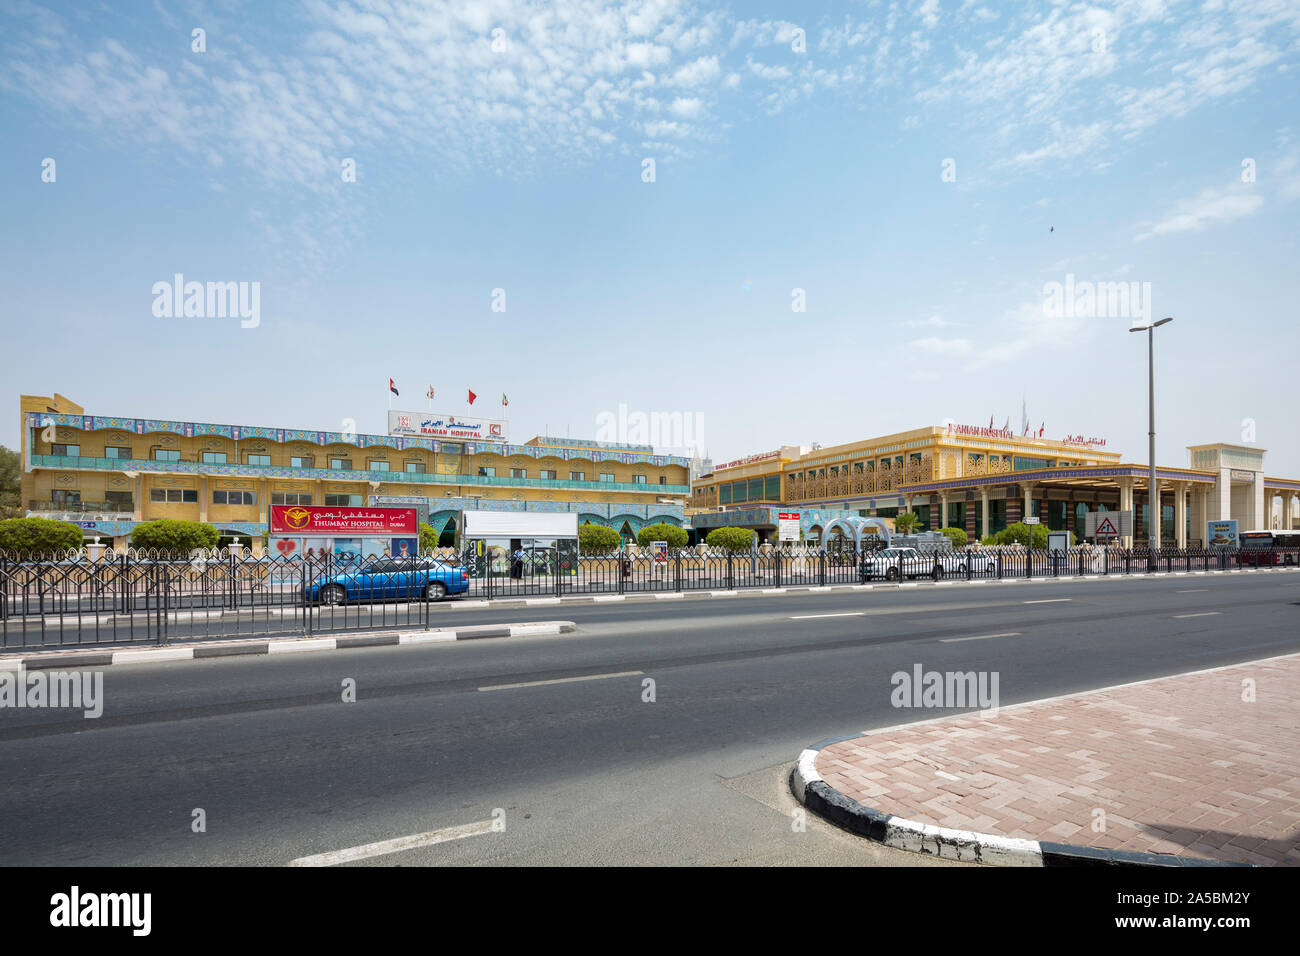 The Iranian Hospital in Dubai is located on the Al Wasl Road in Jumeirah, Dubai, United Arab Emirates Stock Photo